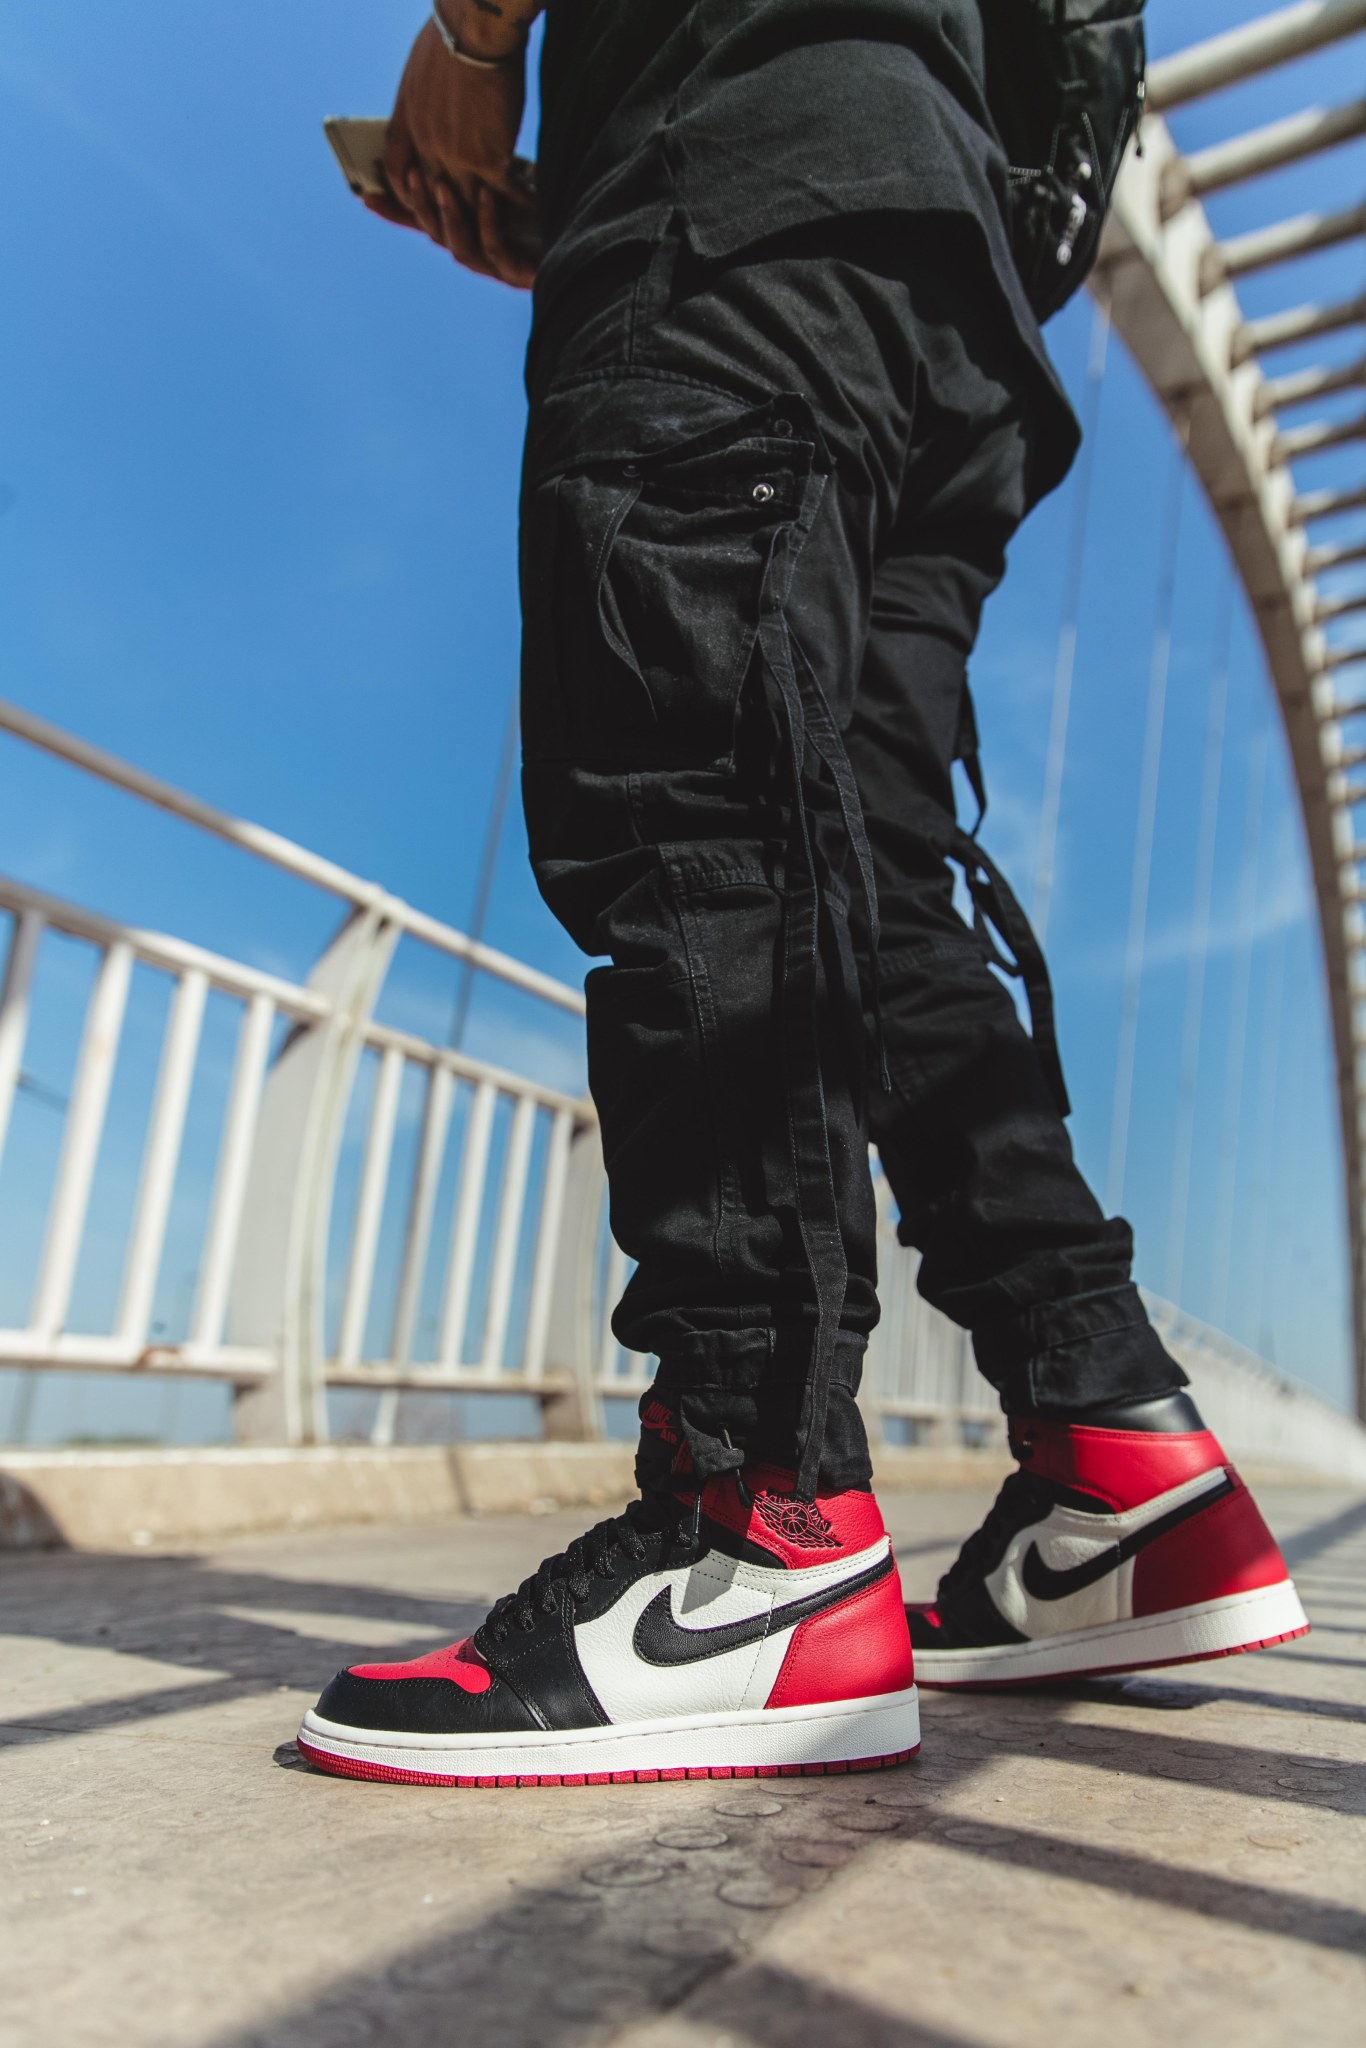 Streetwear Fit Of The Day – Air Jordan 1 Retro Bred Toe + Supreme, CDG ...